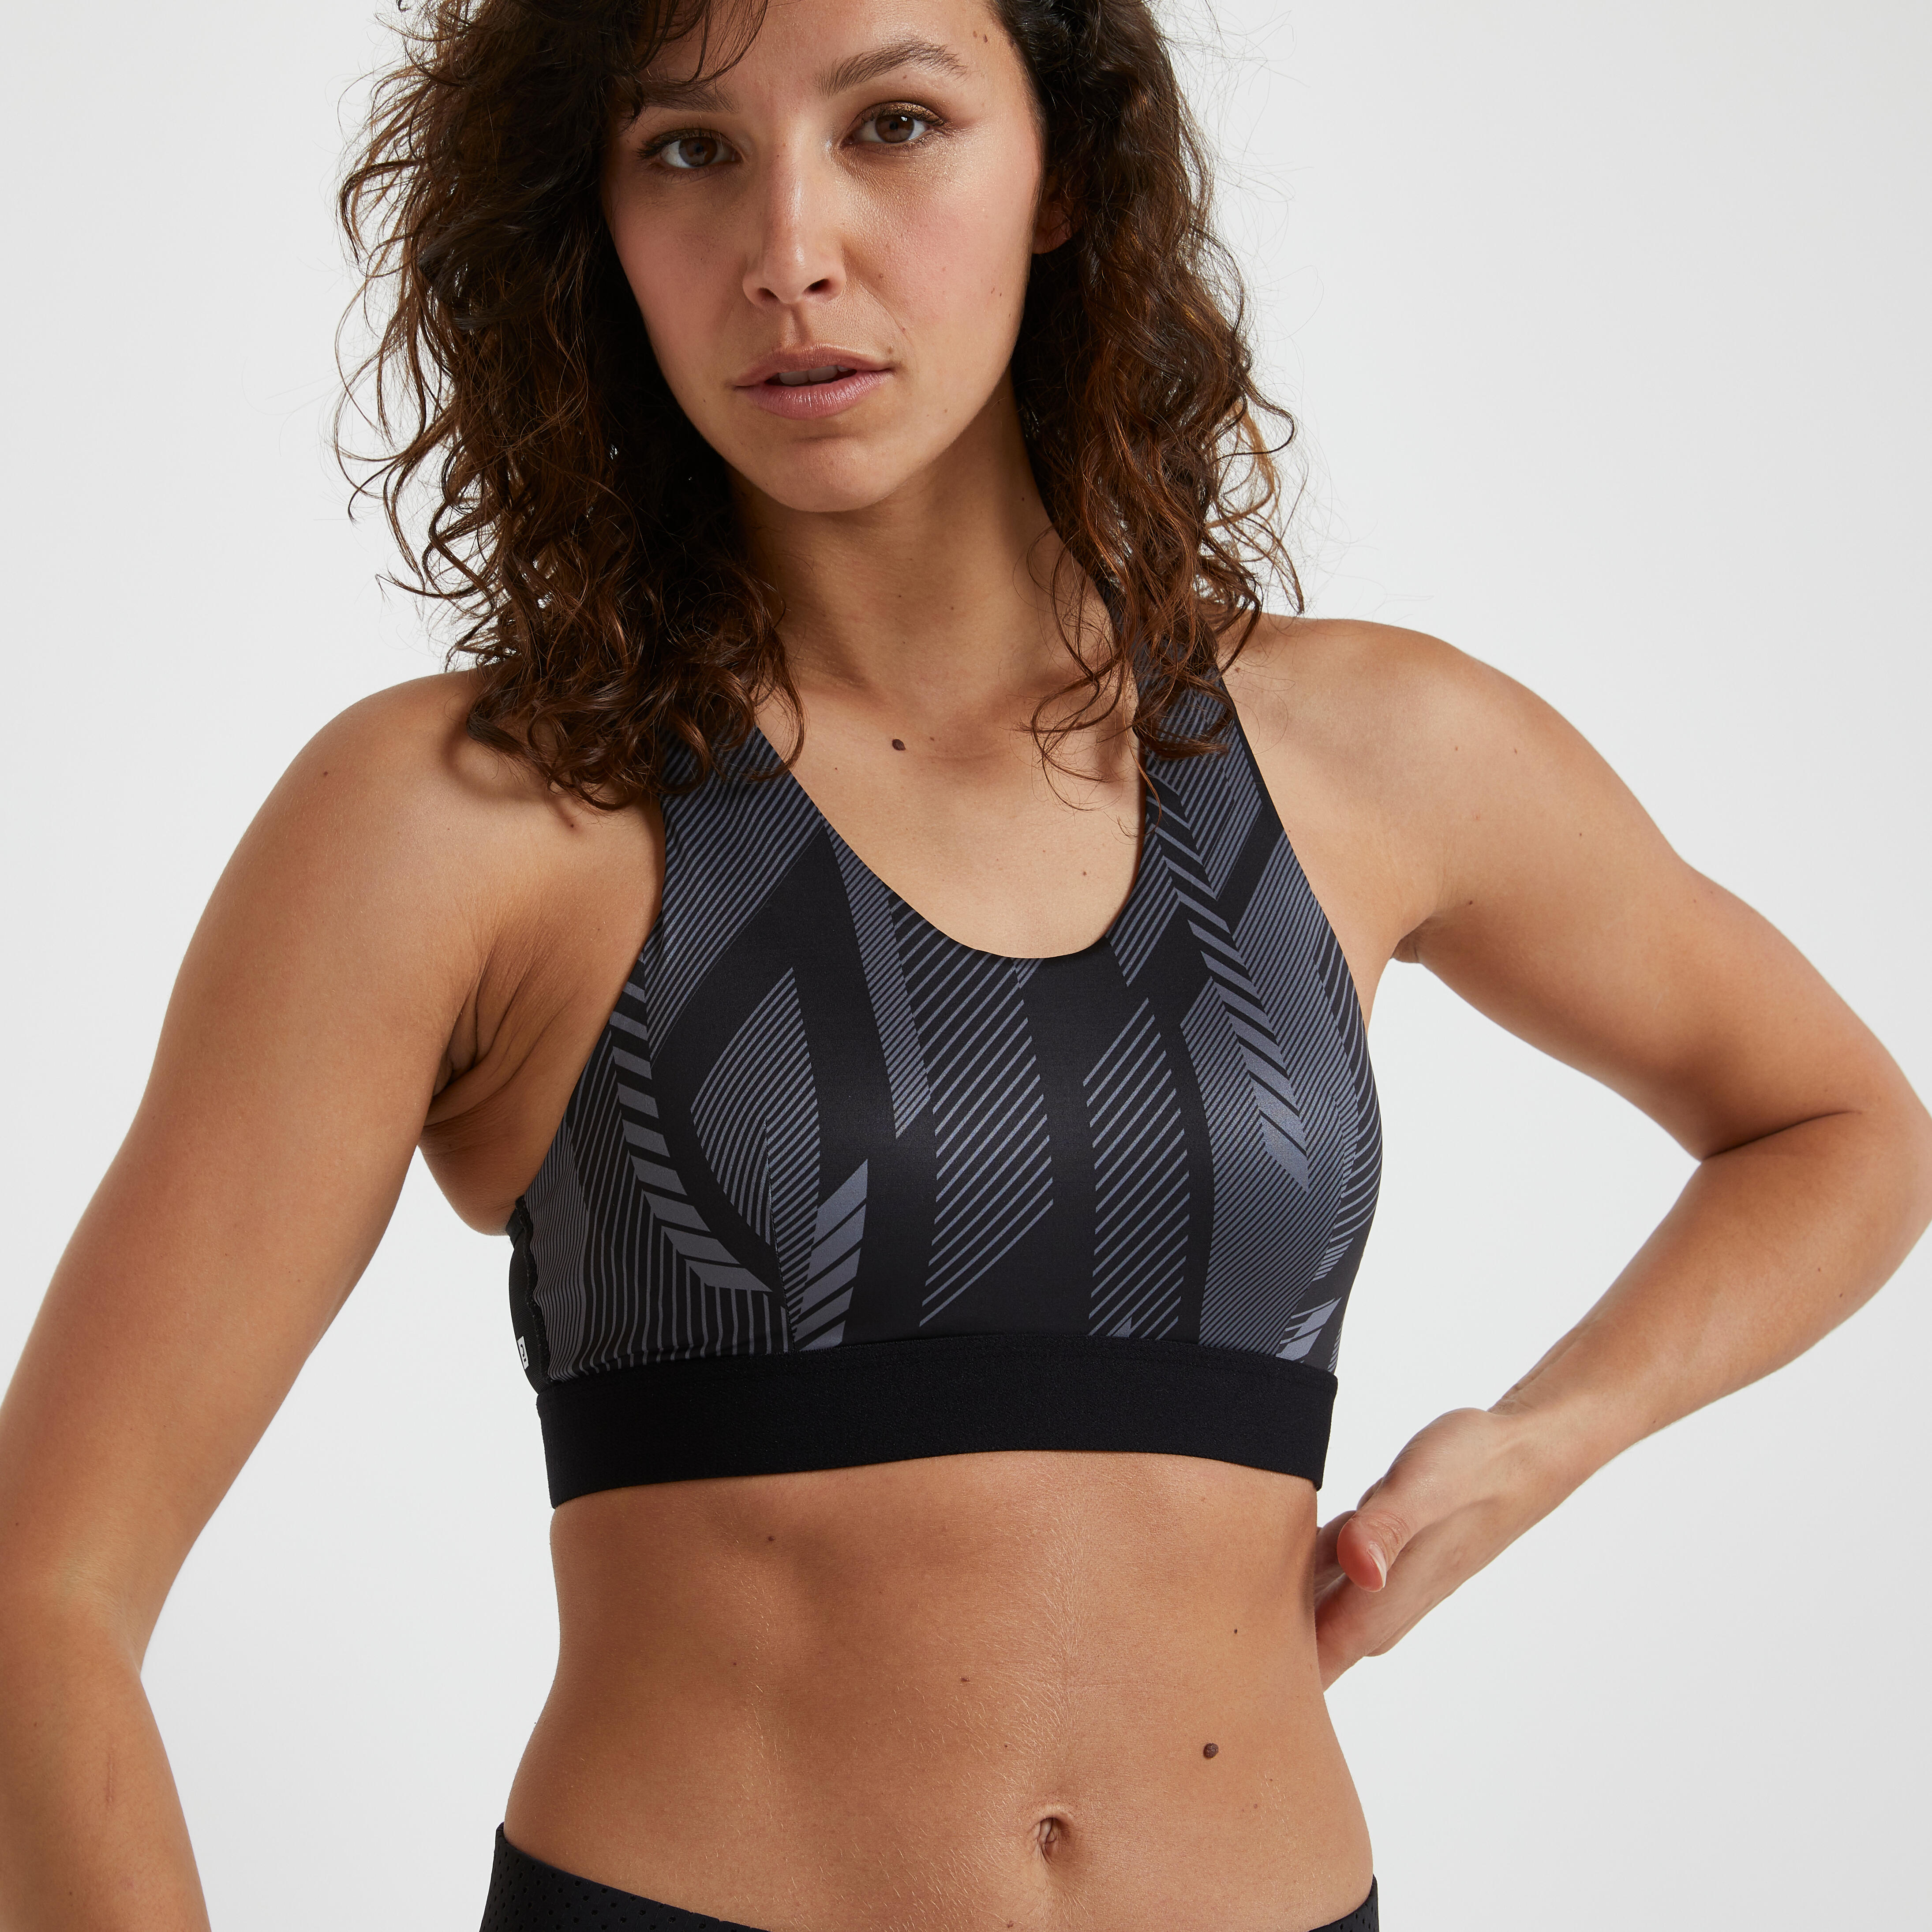 Roxy + Decathlon sports bra pack - Clozen